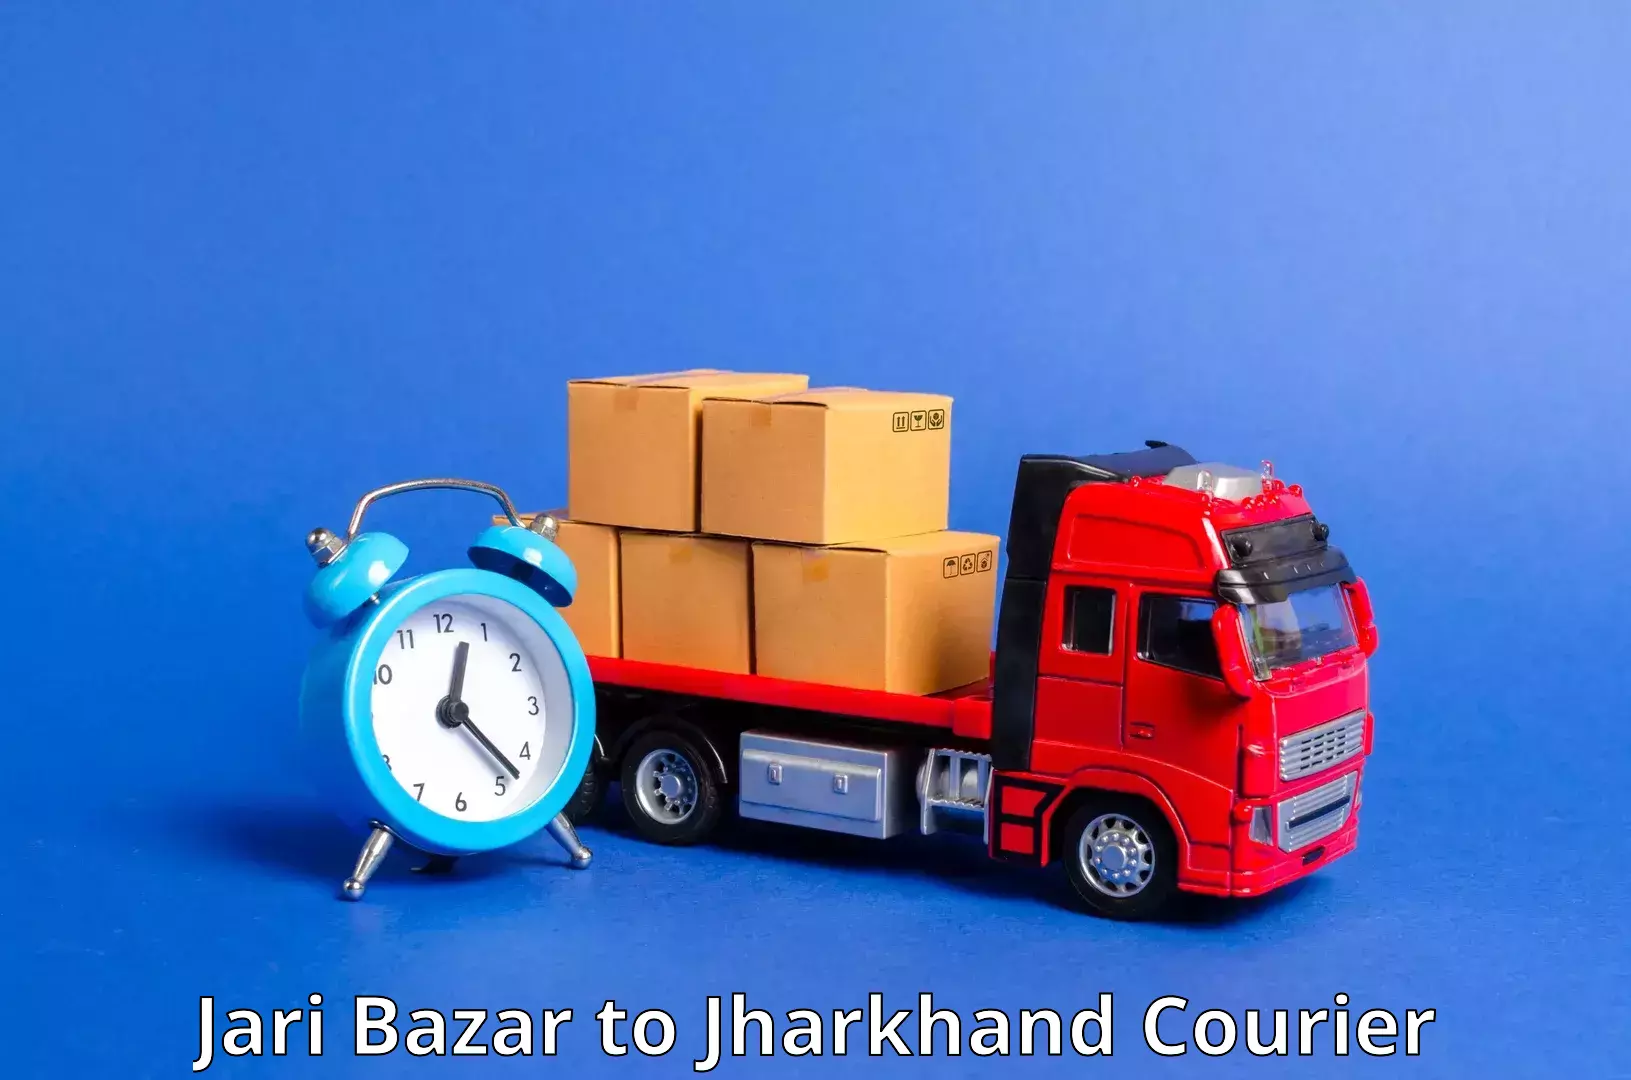 High-efficiency logistics Jari Bazar to Peterbar